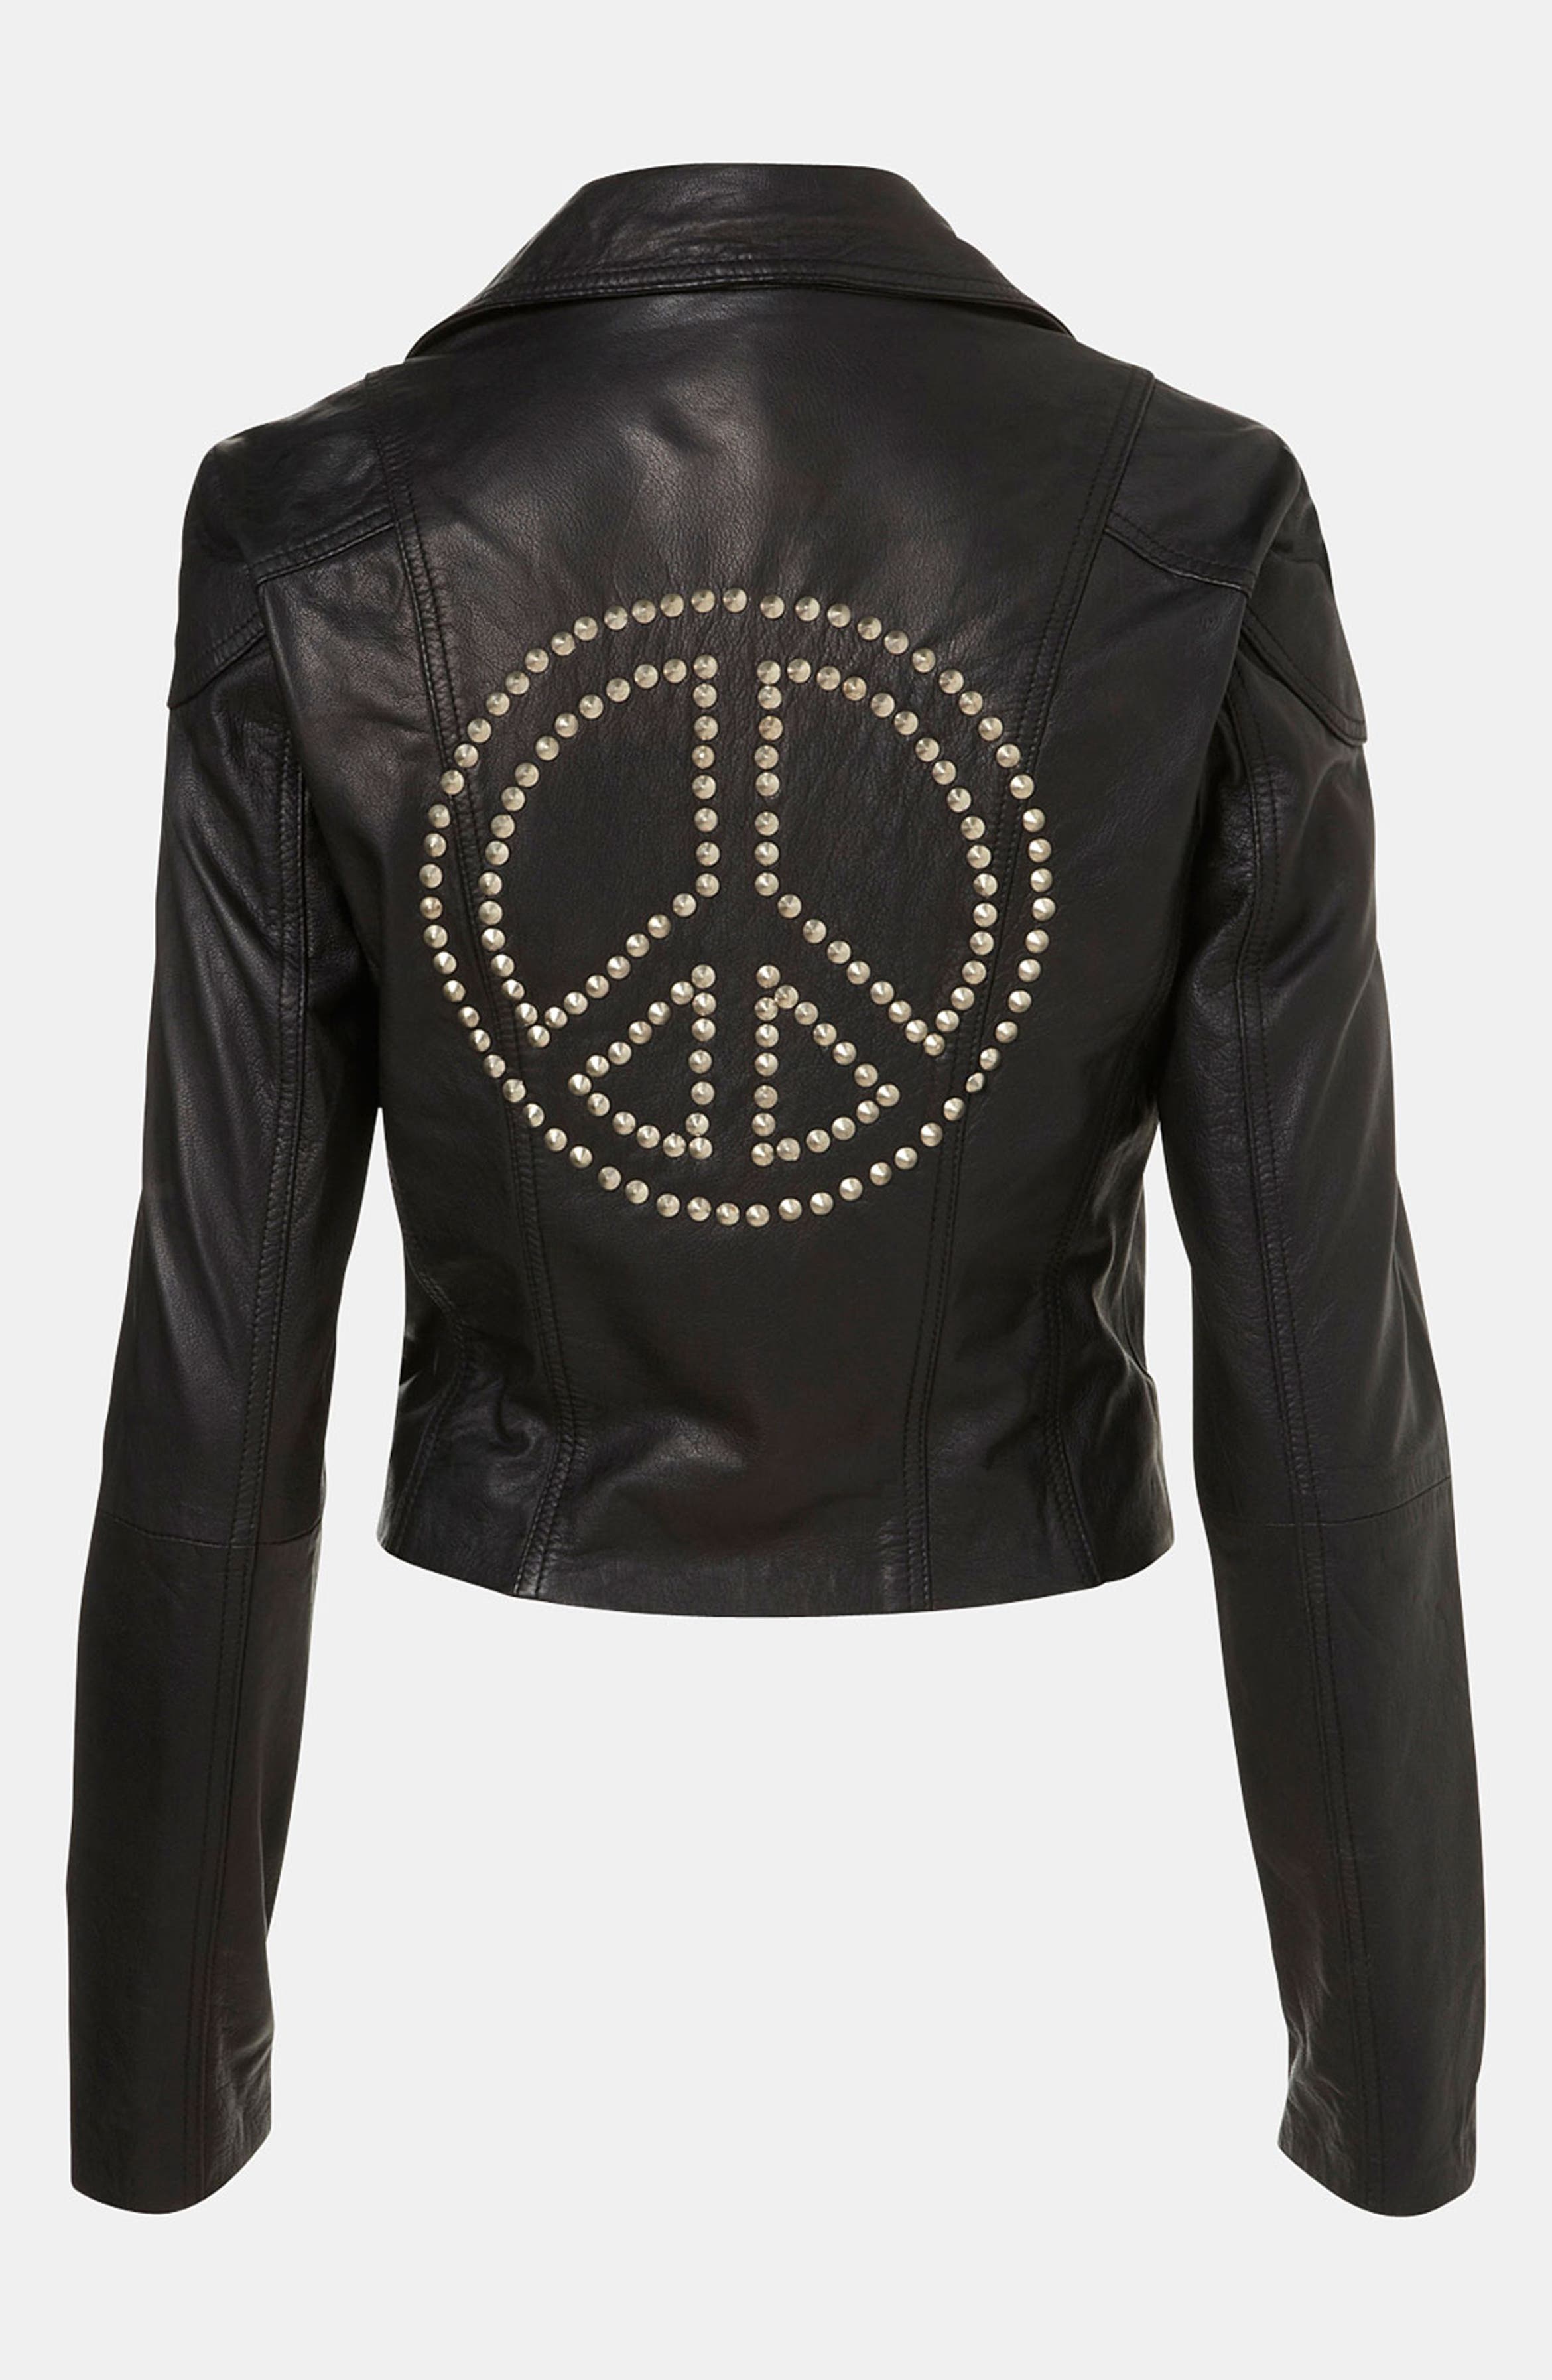 Topshop 'Peace' Studded Leather Jacket | Nordstrom